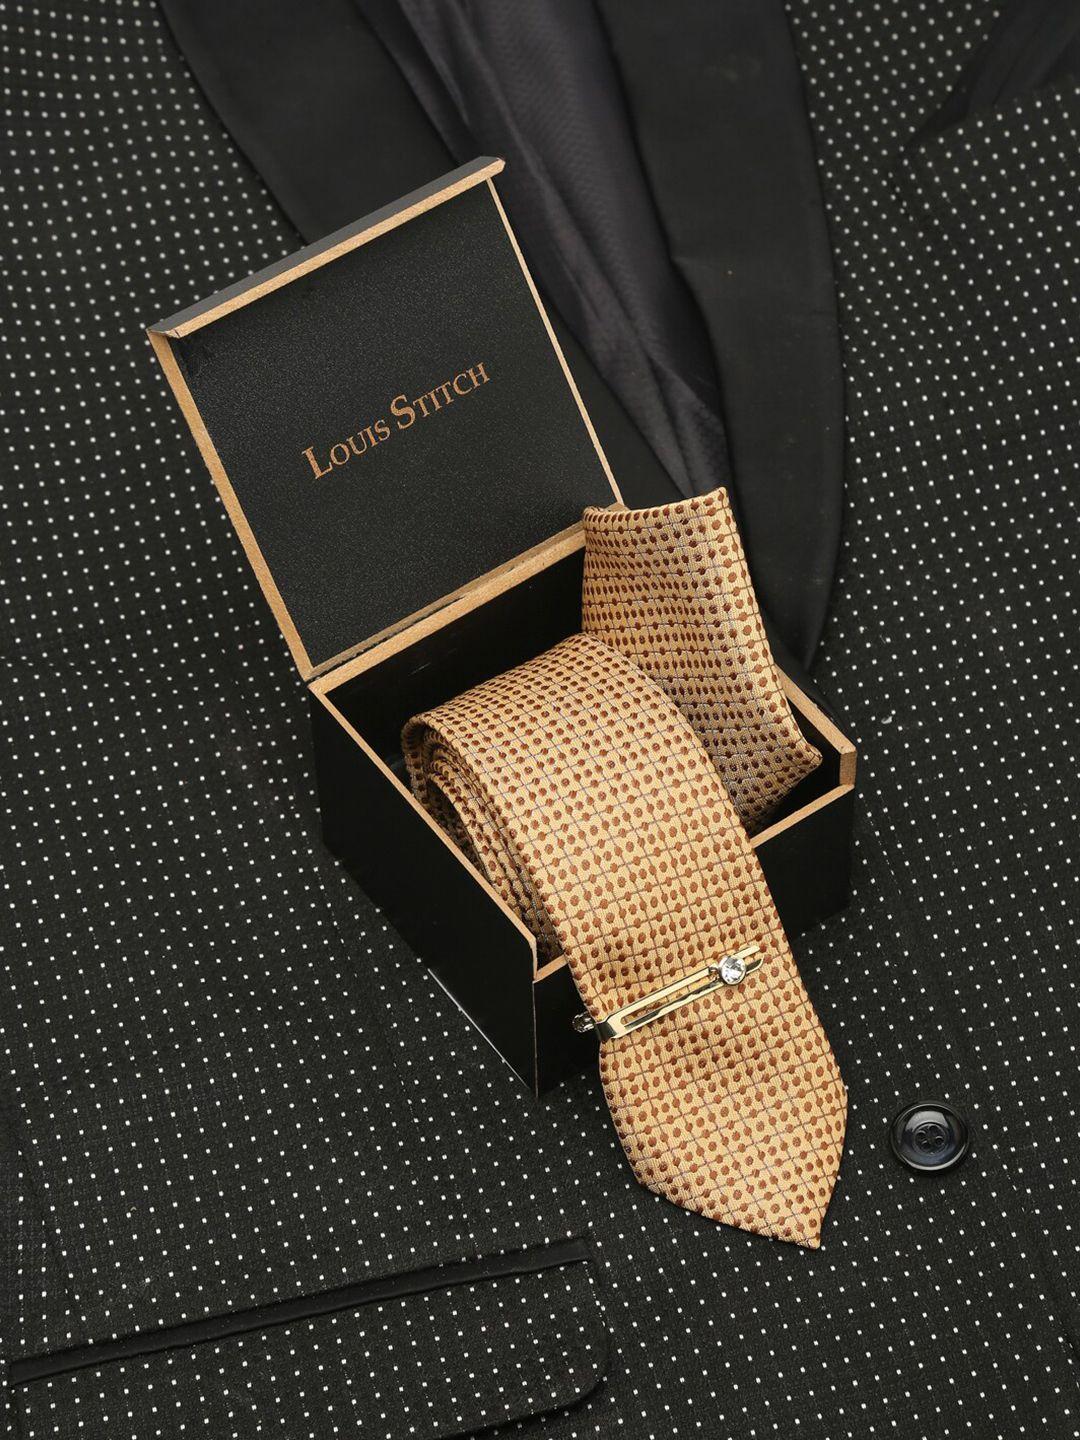 louis stitch men cream coloured woven design silk broad tie set